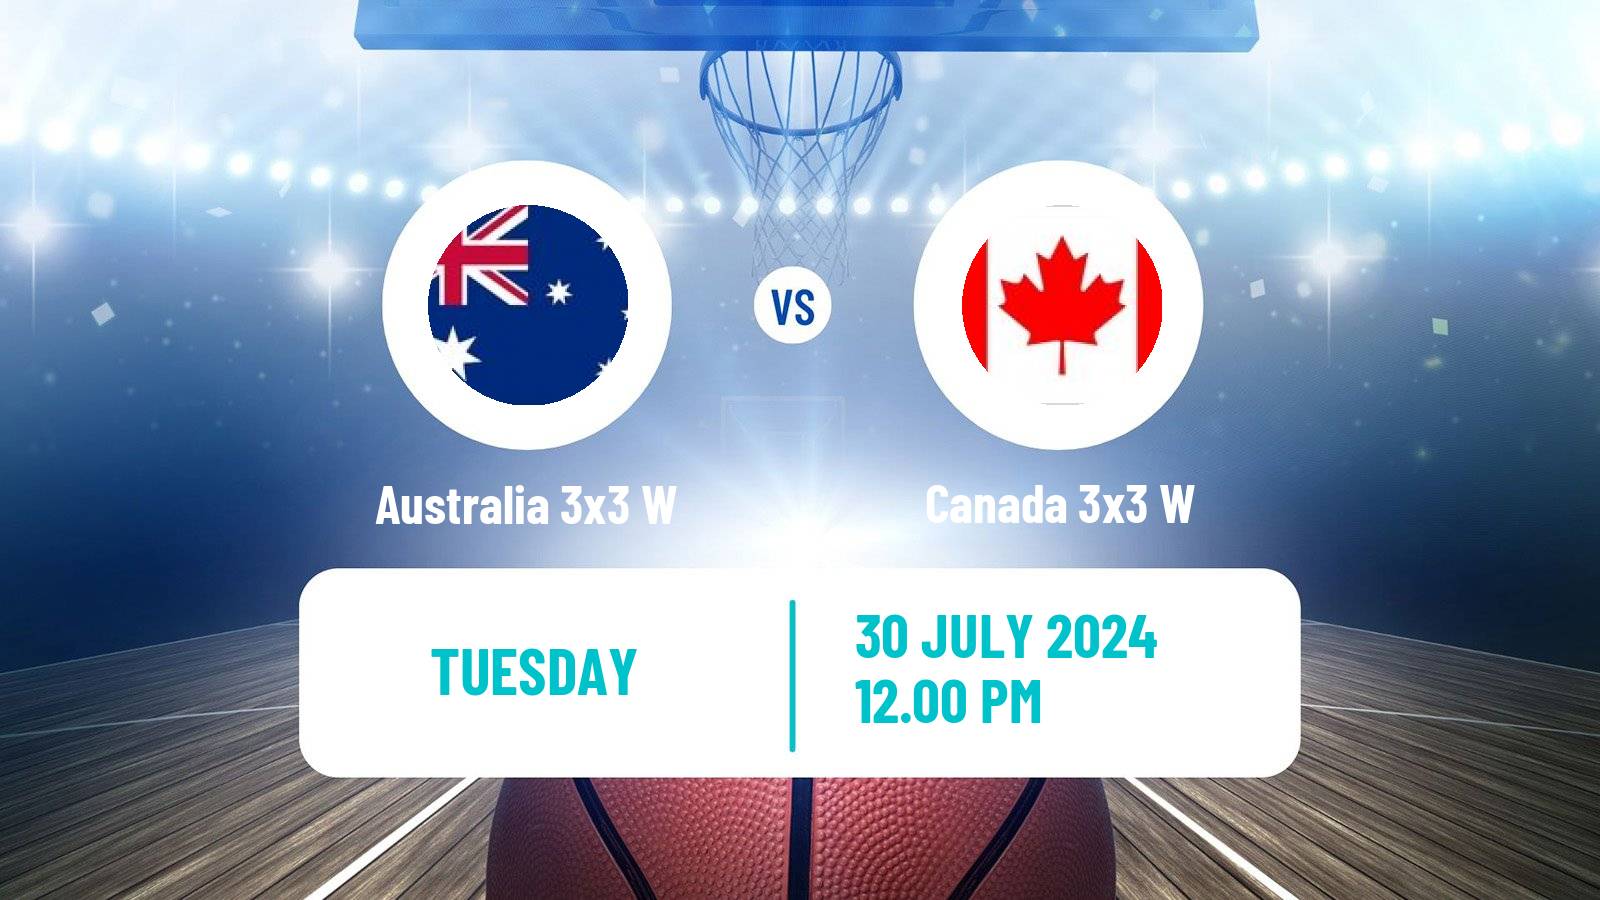 Basketball Olympic Games Basketball 3x3 Women Australia 3x3 W - Canada 3x3 W